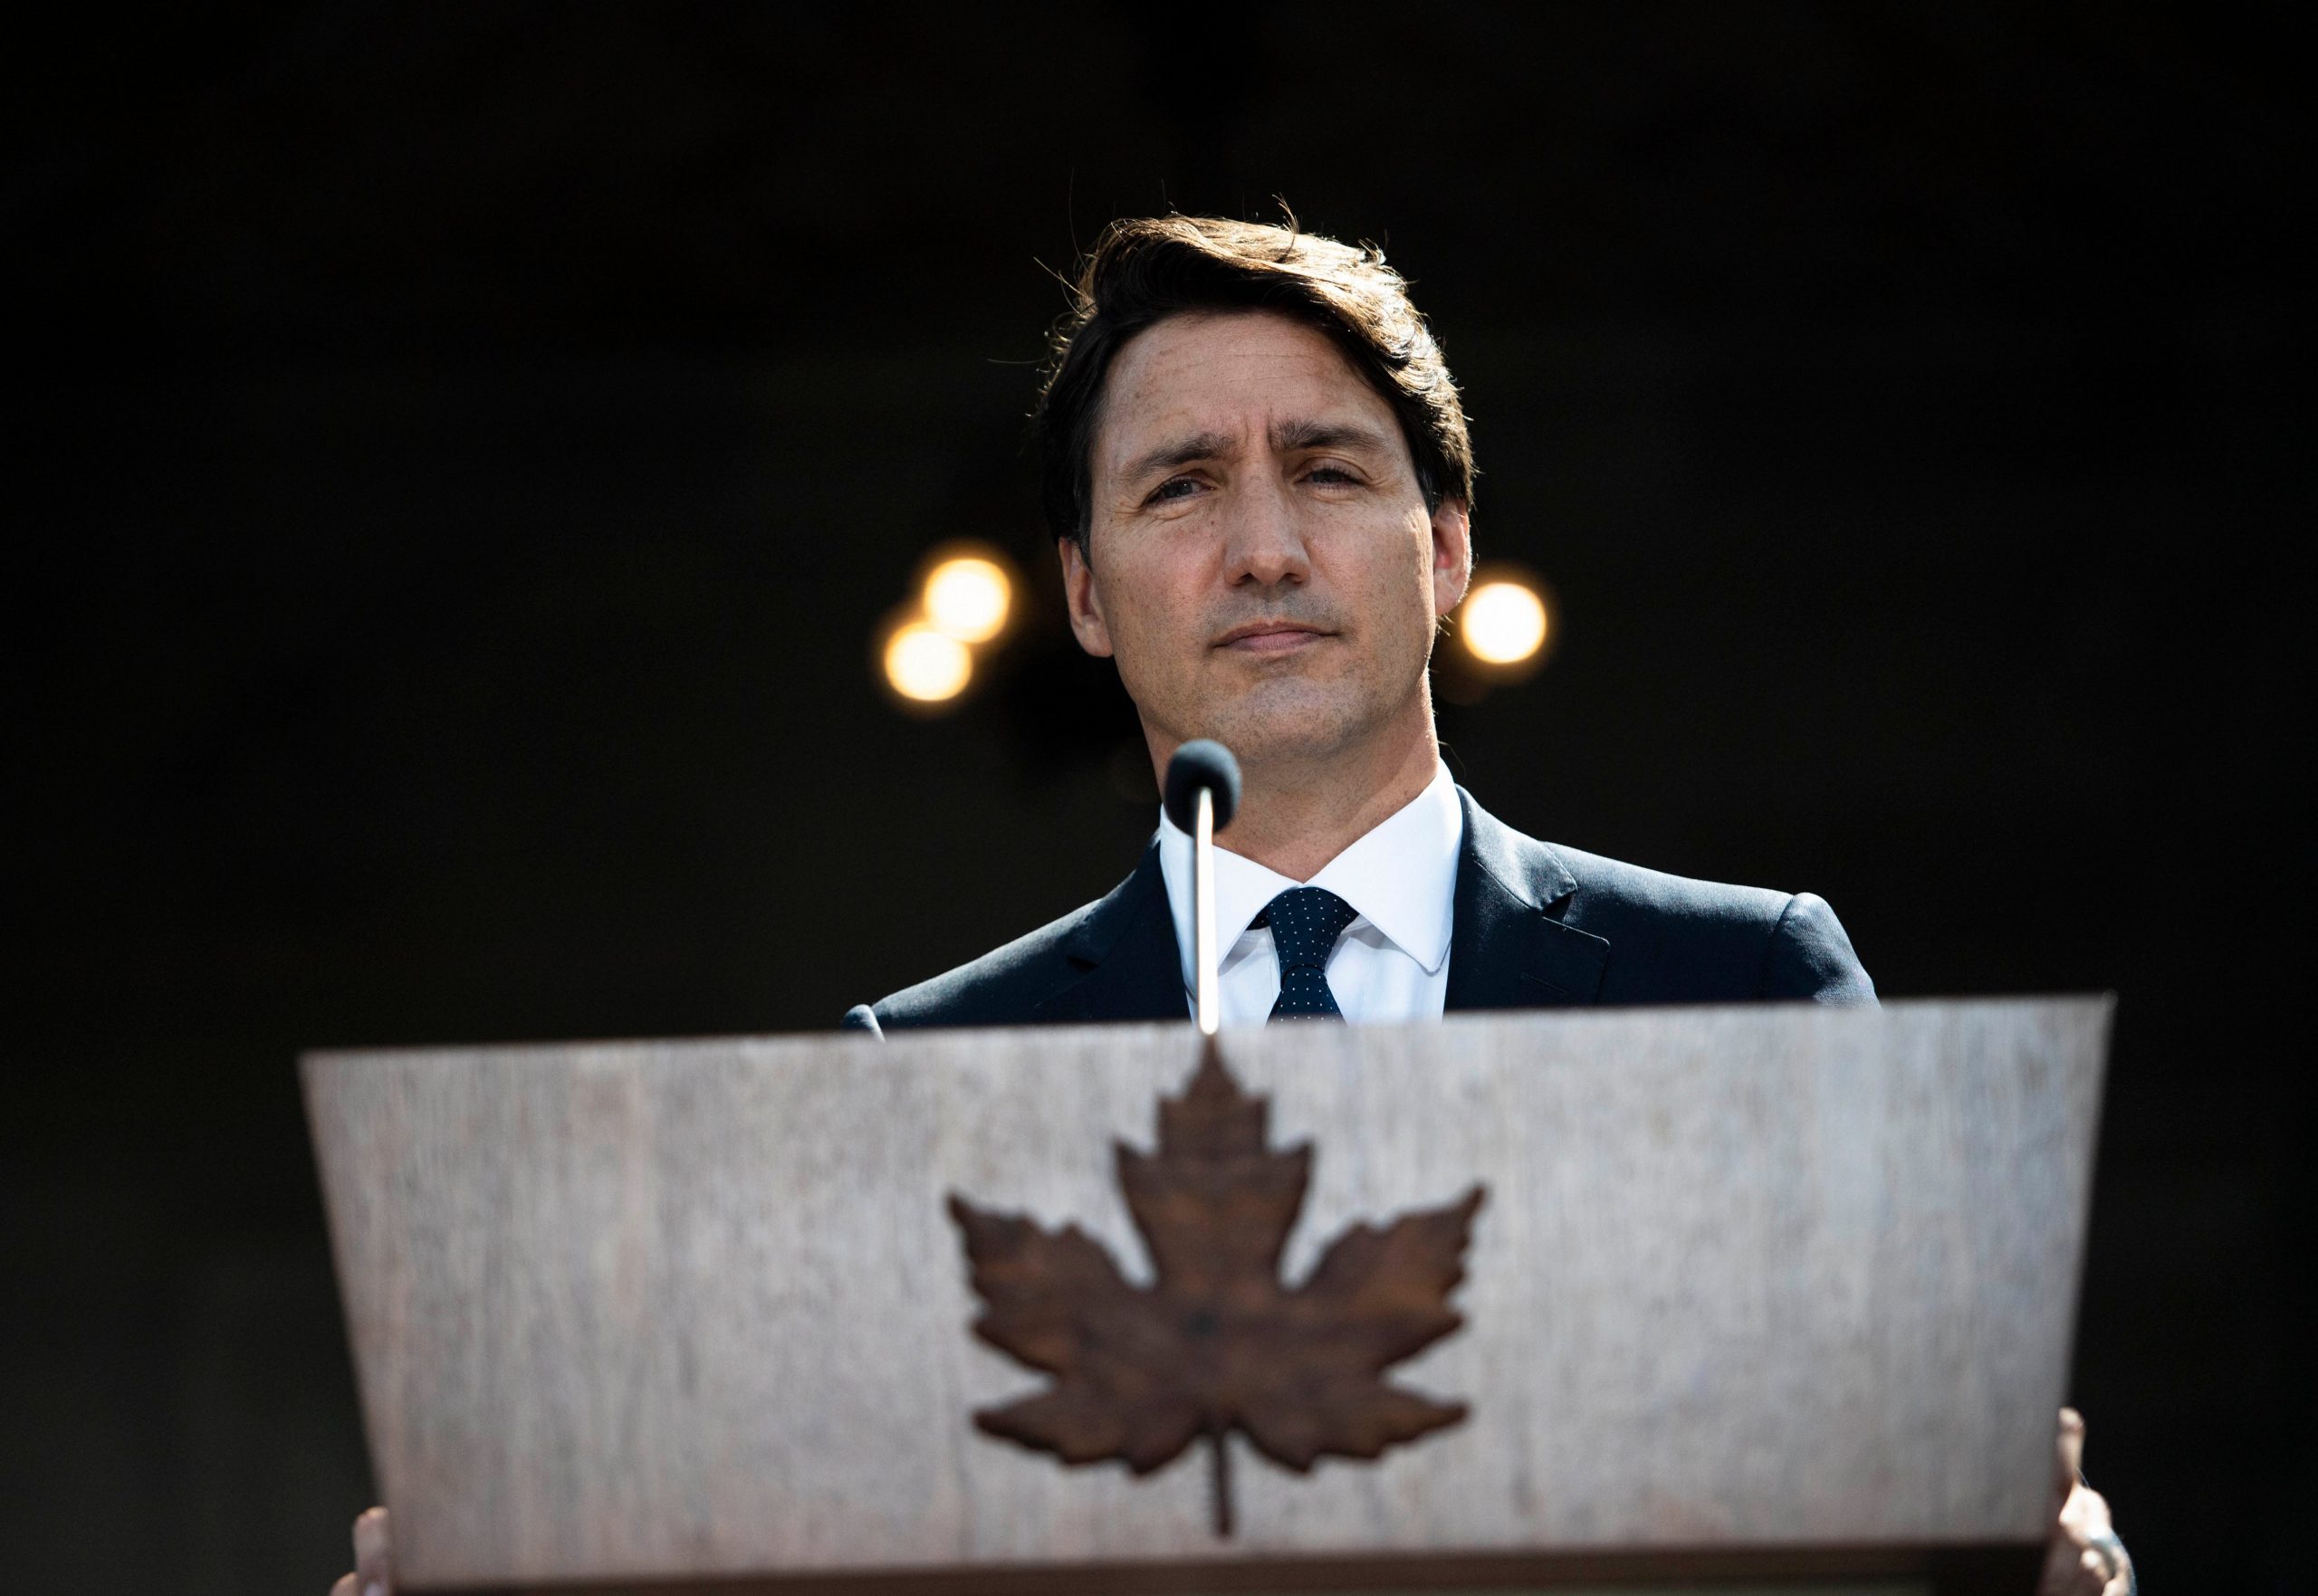 Justin Trudeau and family move to secret location amid Canada COVID protests: Report